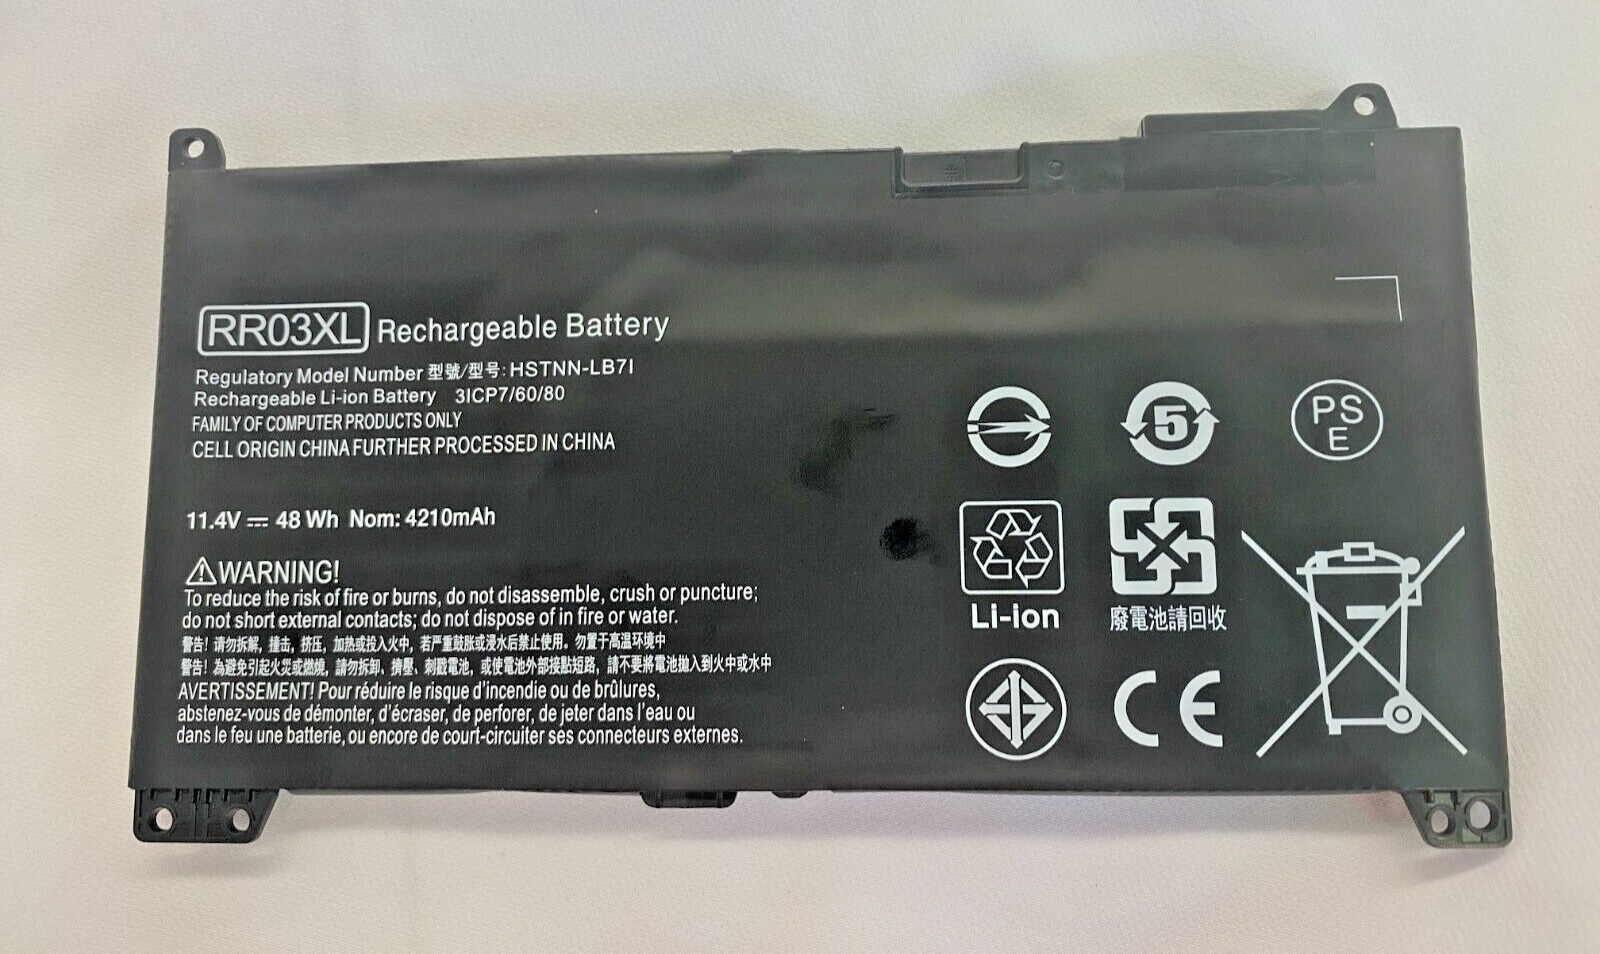 Rechargeable Li-ion Battery for Laptop - RR03XL 11.4V 48 Wh Nom: 4210mAh